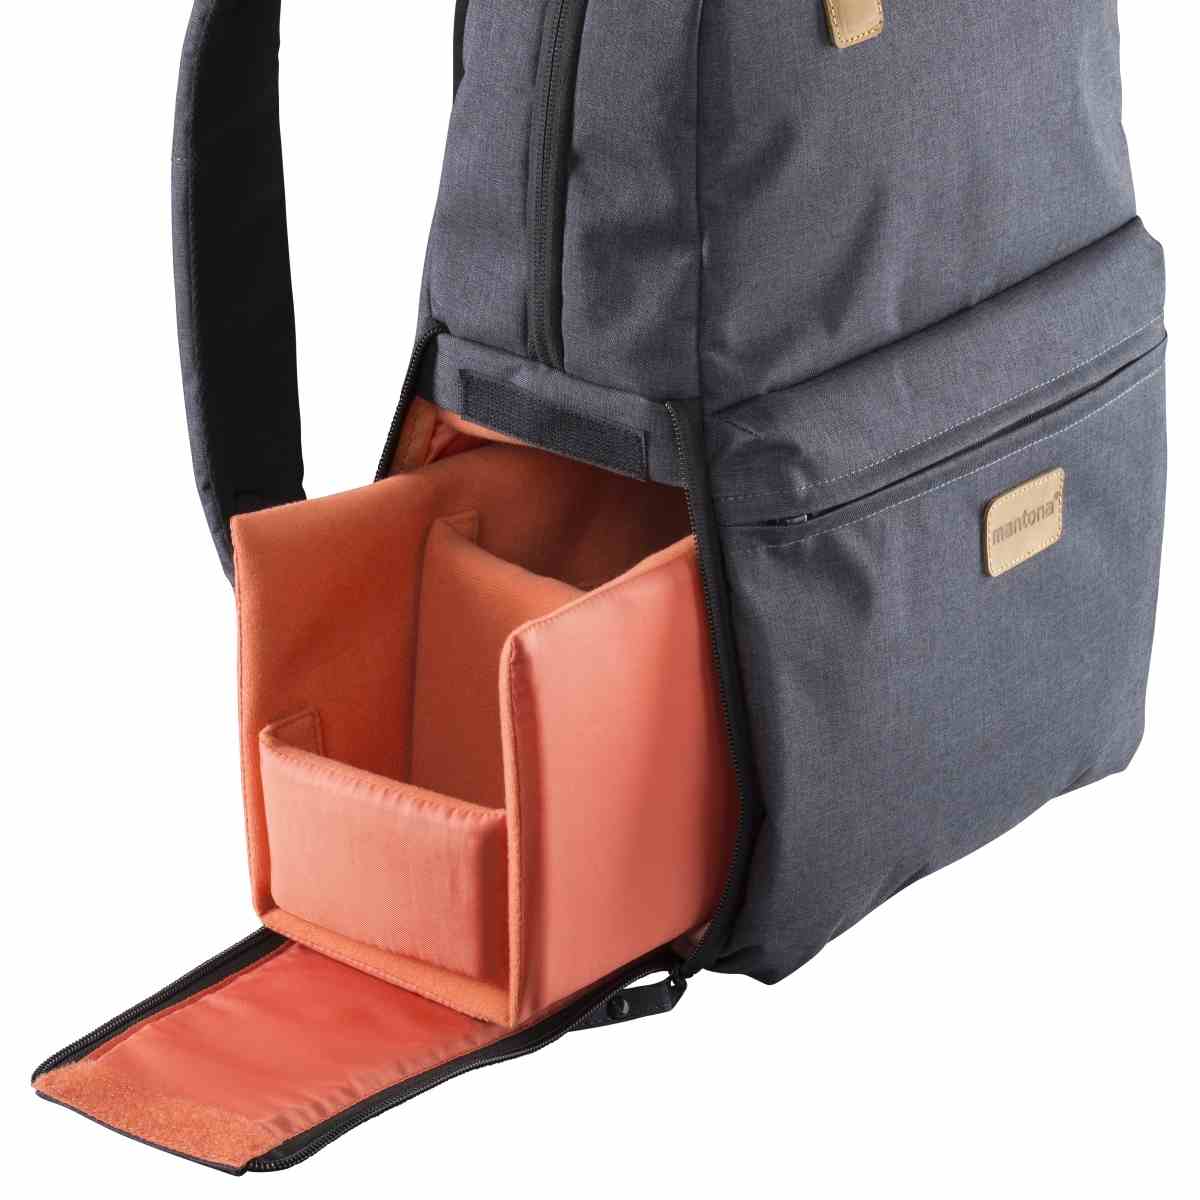 urban companion photo backpack & bag 2 in 1